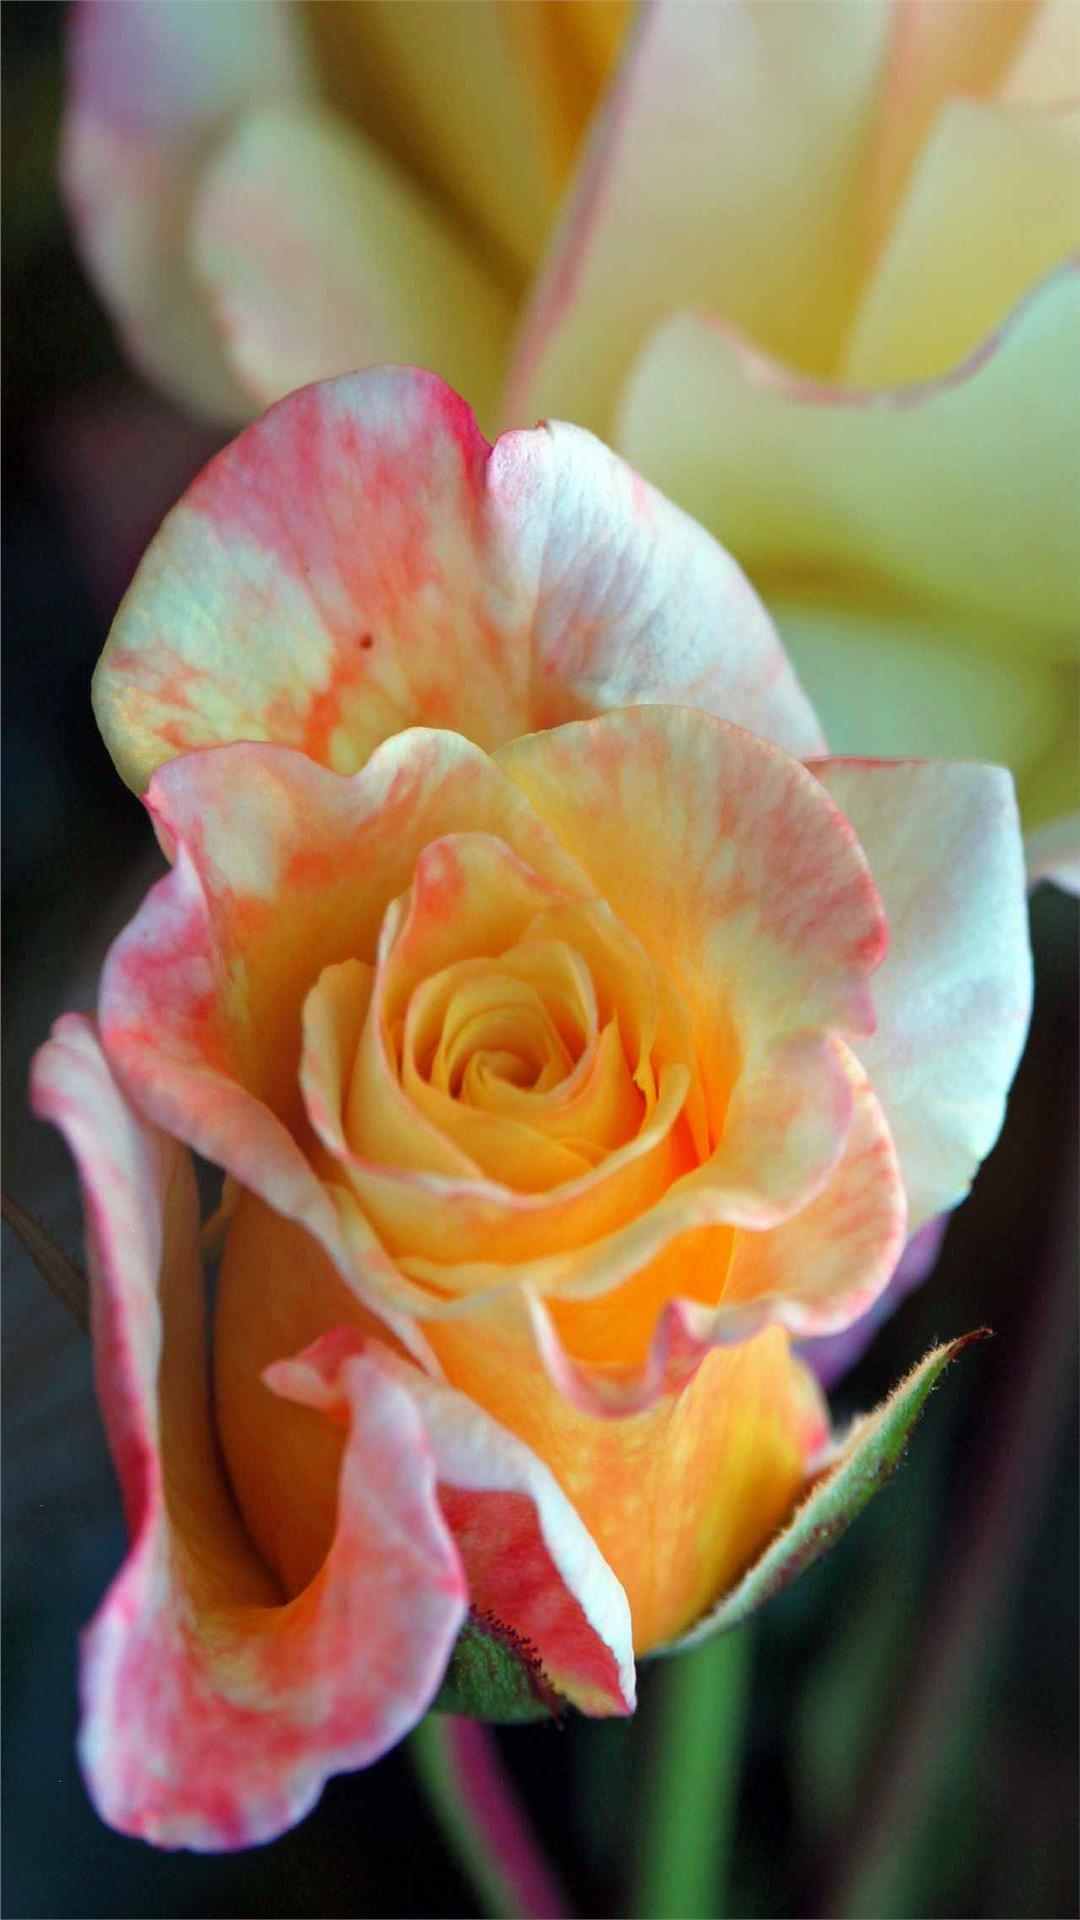 Rose Flower iPhone Wallpaper